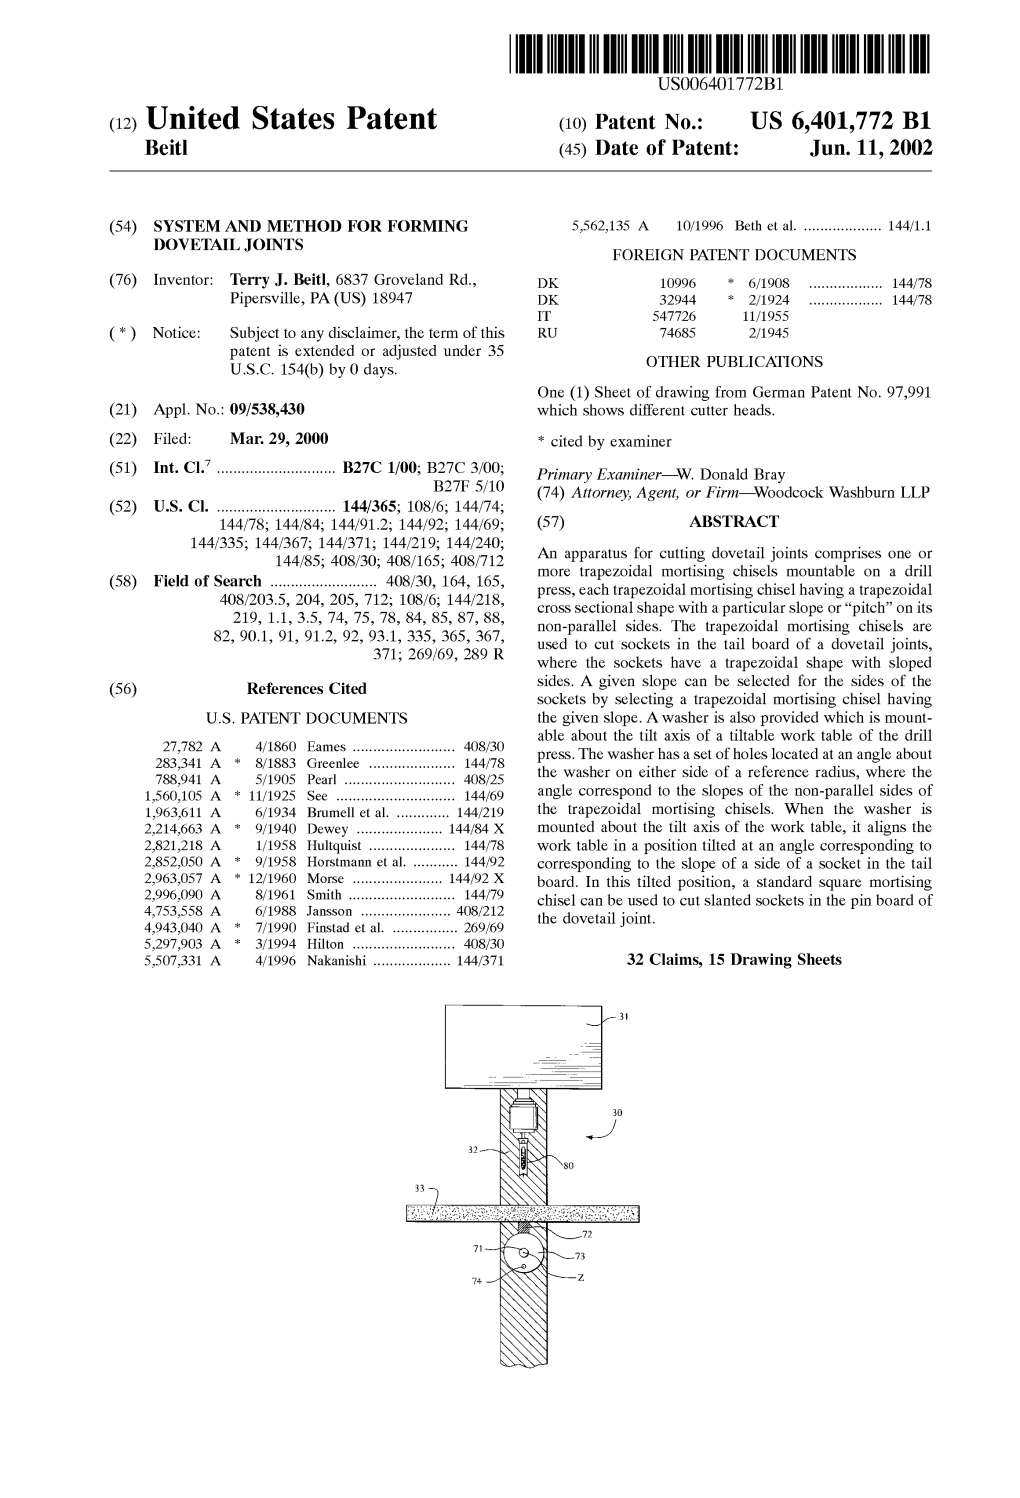 (12) United States Patent (10) Patent No.: US 6,401,772 B1 Beit (45) Date of Patent: Jun